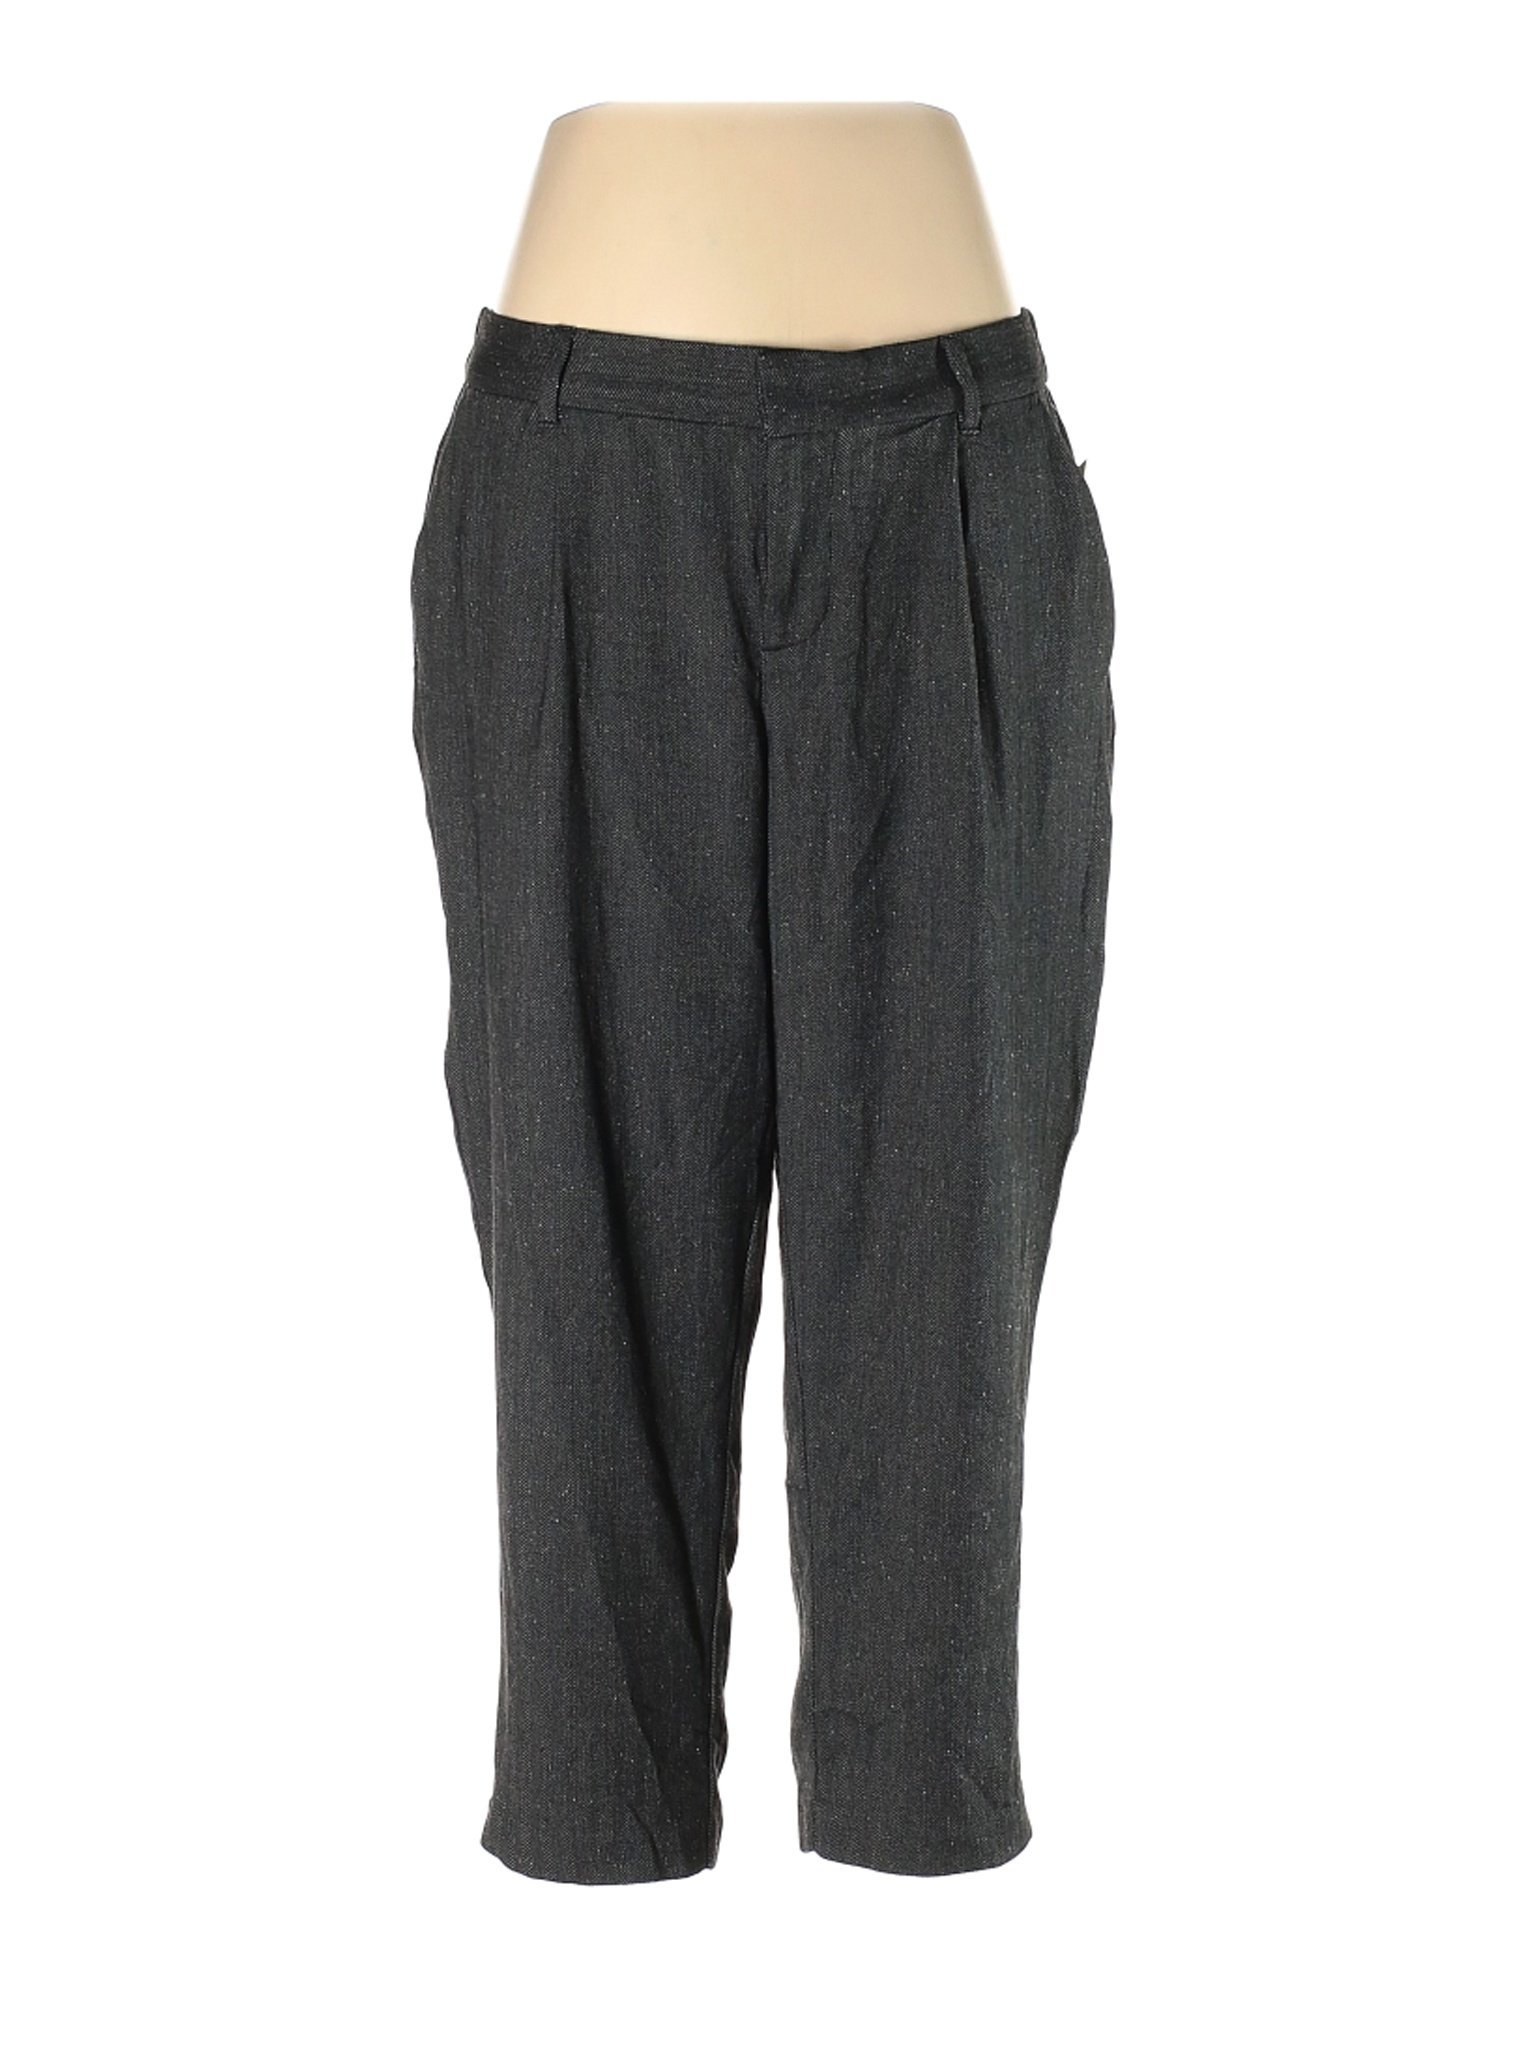 NWT Old Navy Women Gray Dress Pants 18 Plus | eBay